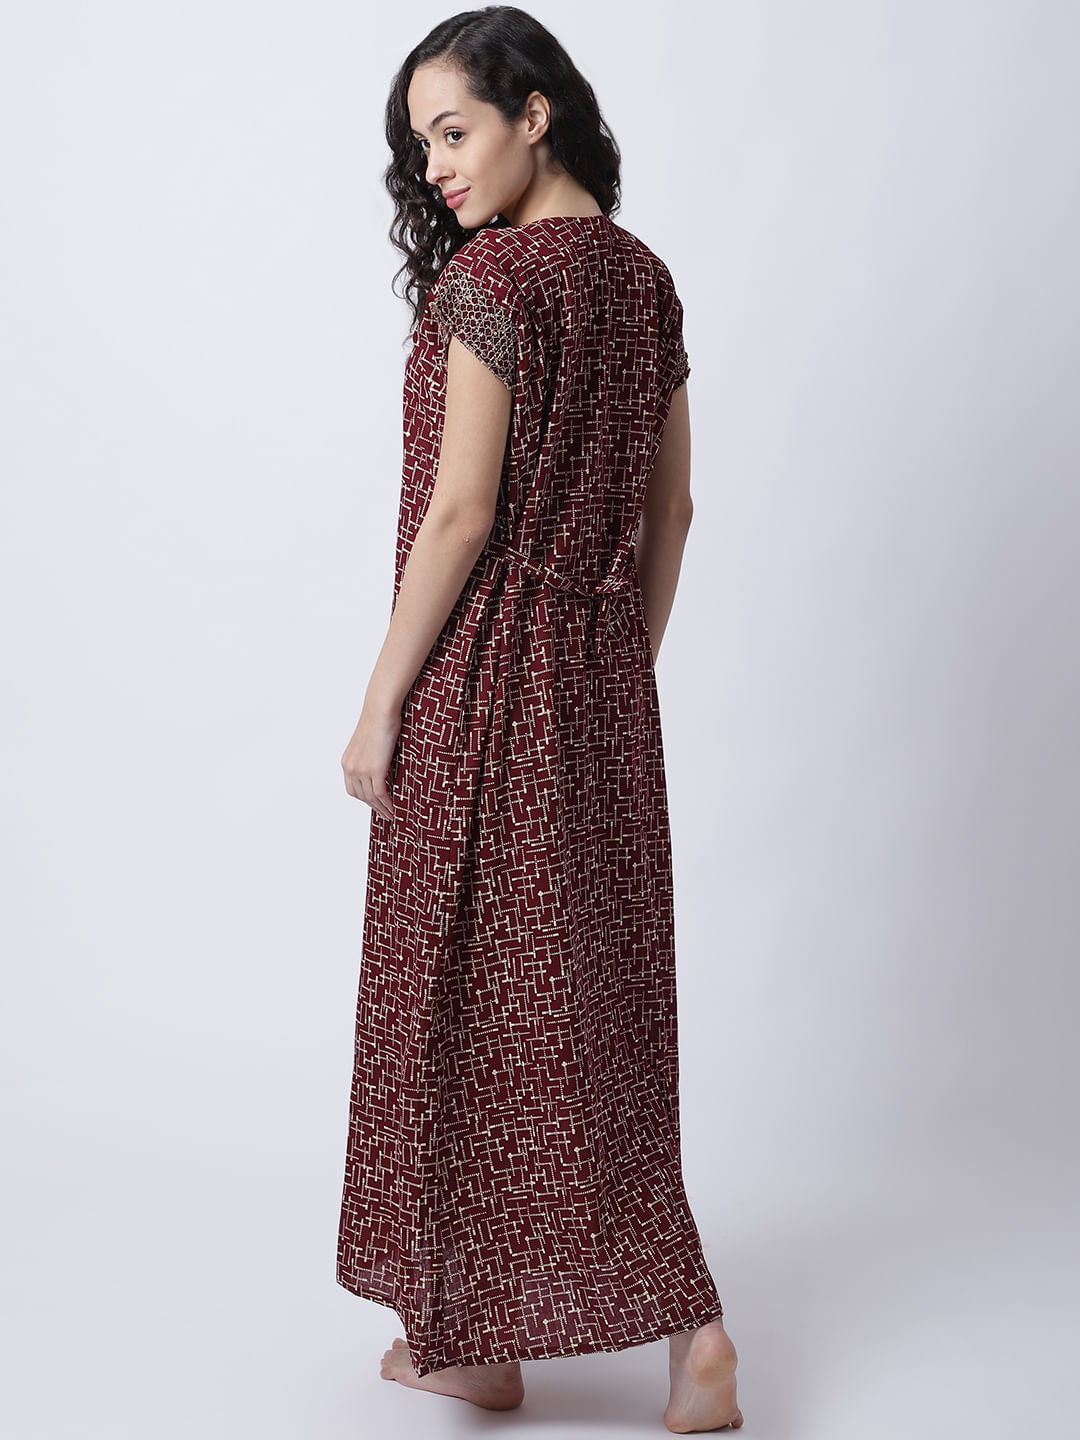 Buy Red 100% Cotton Batik Printed Nighty for Women Online at